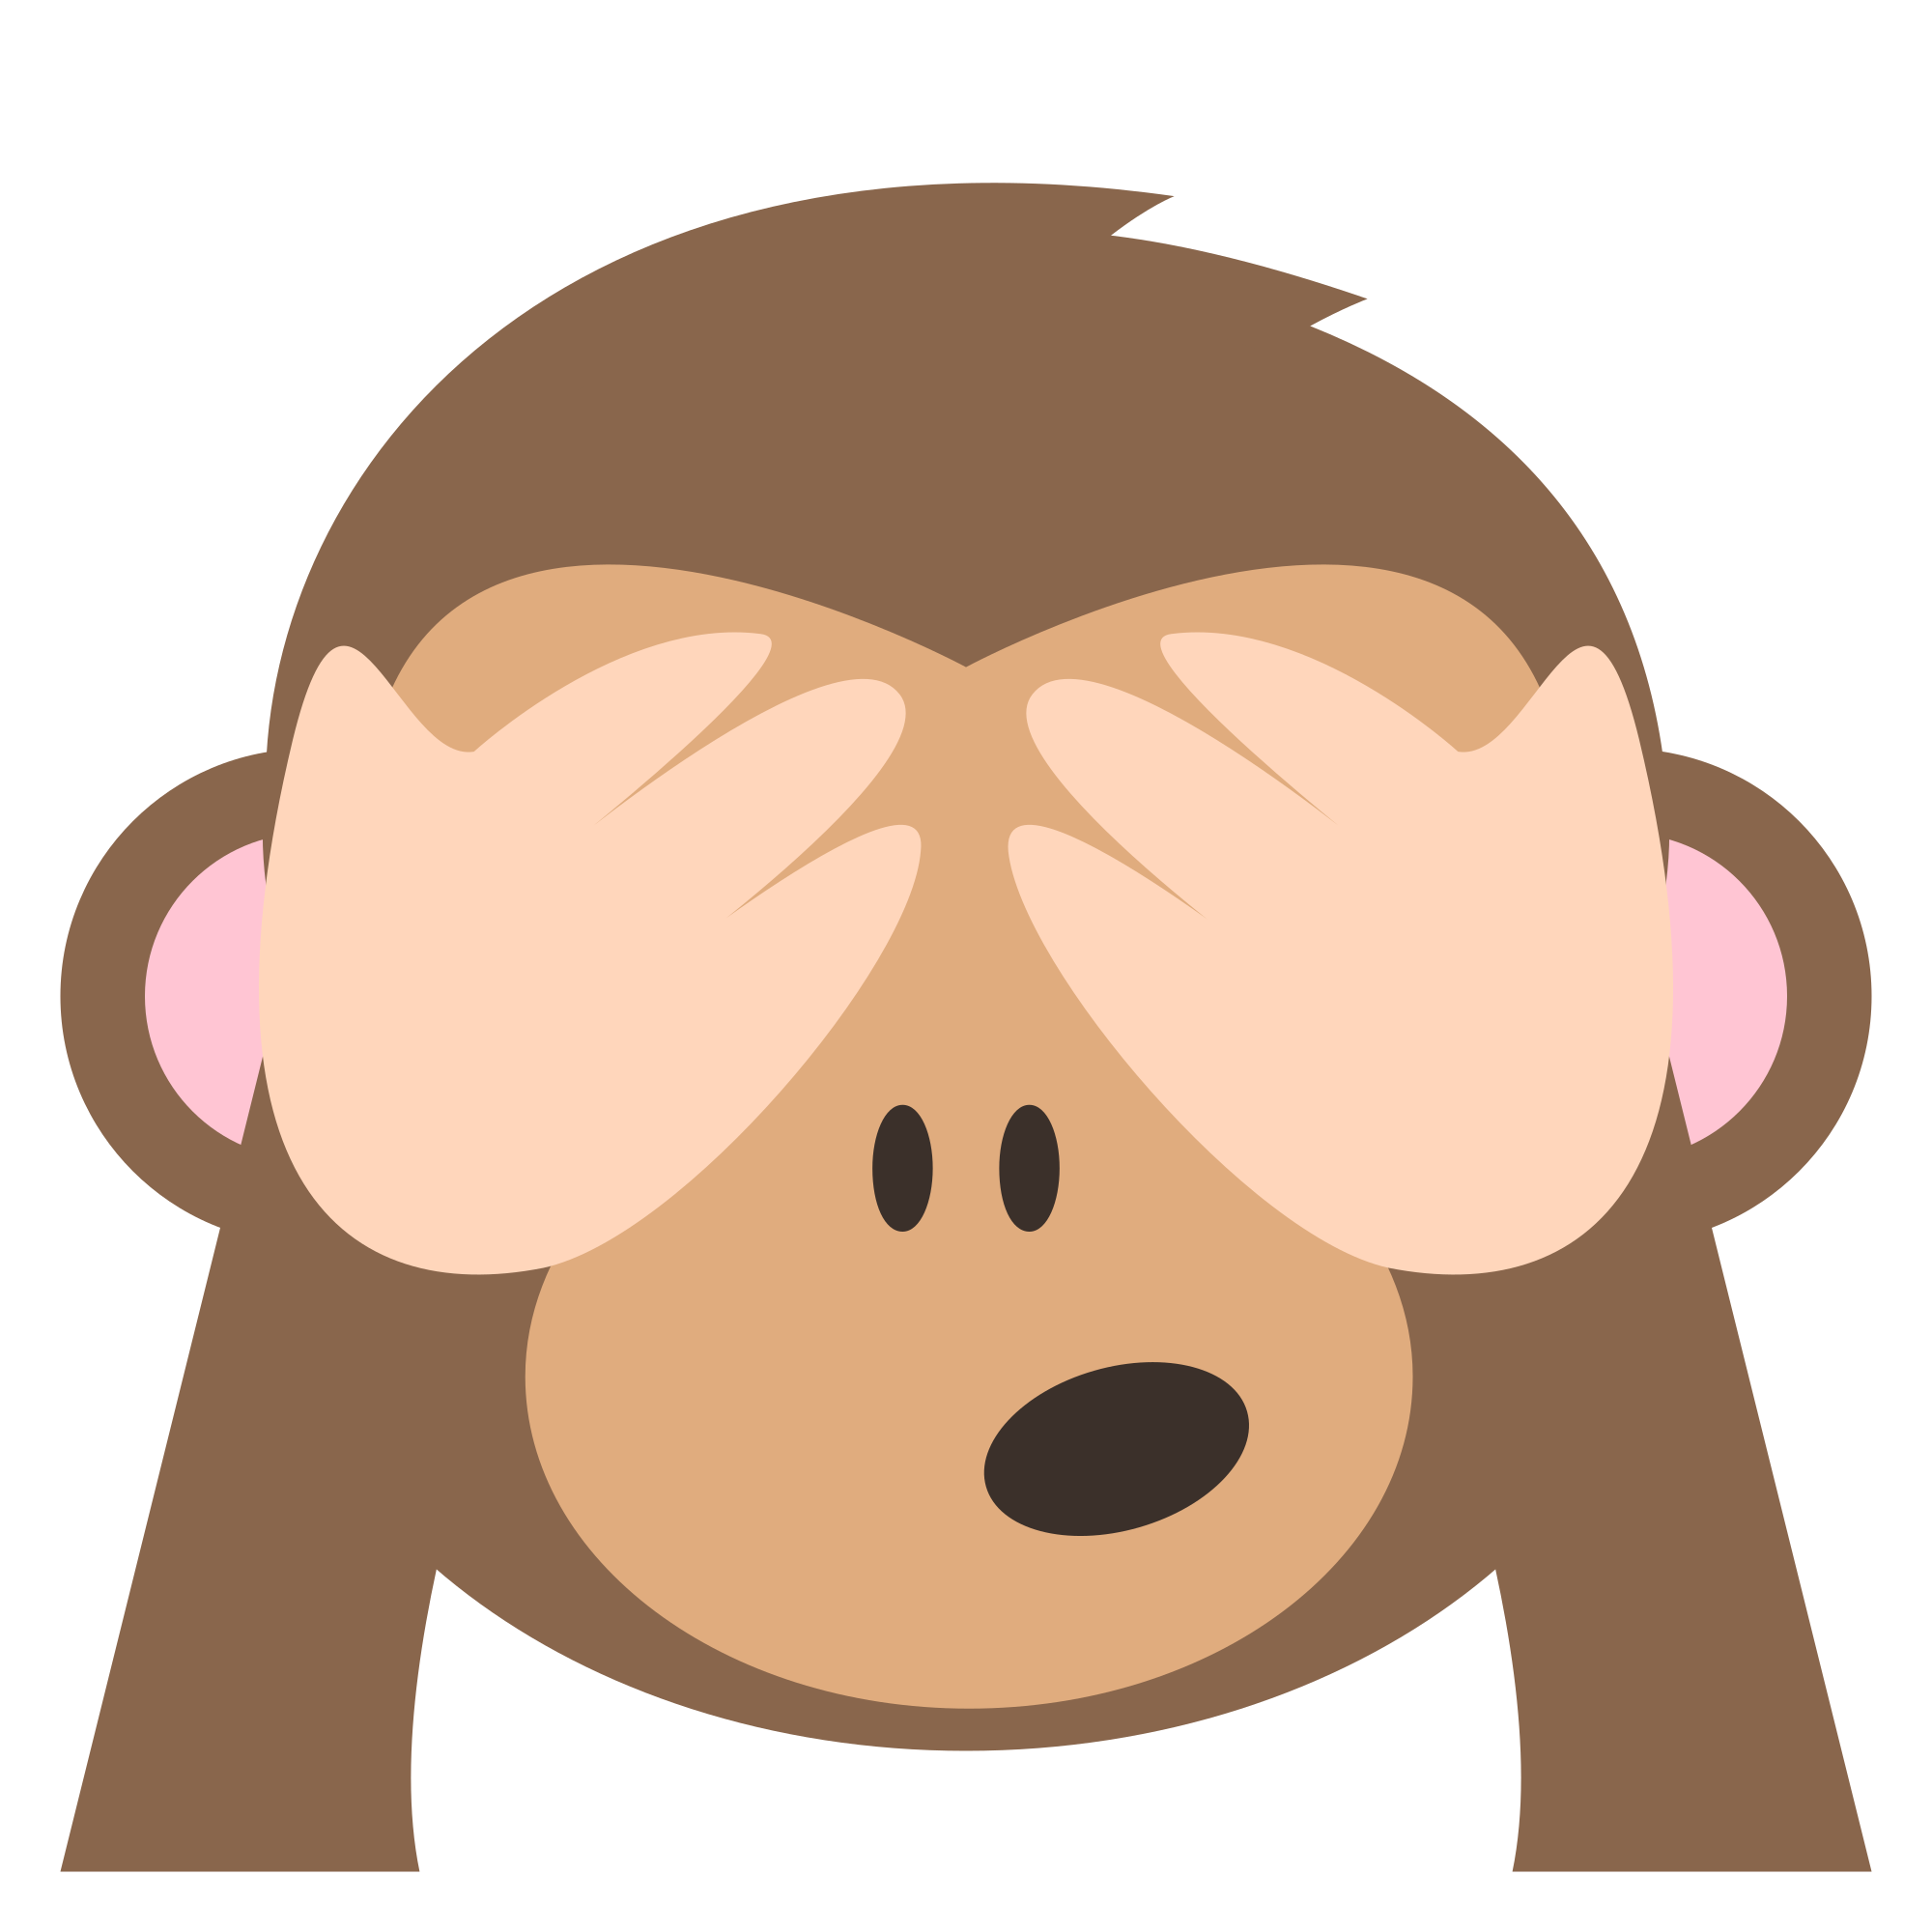 Emoji clipart monkey. Nose picking dangers involved